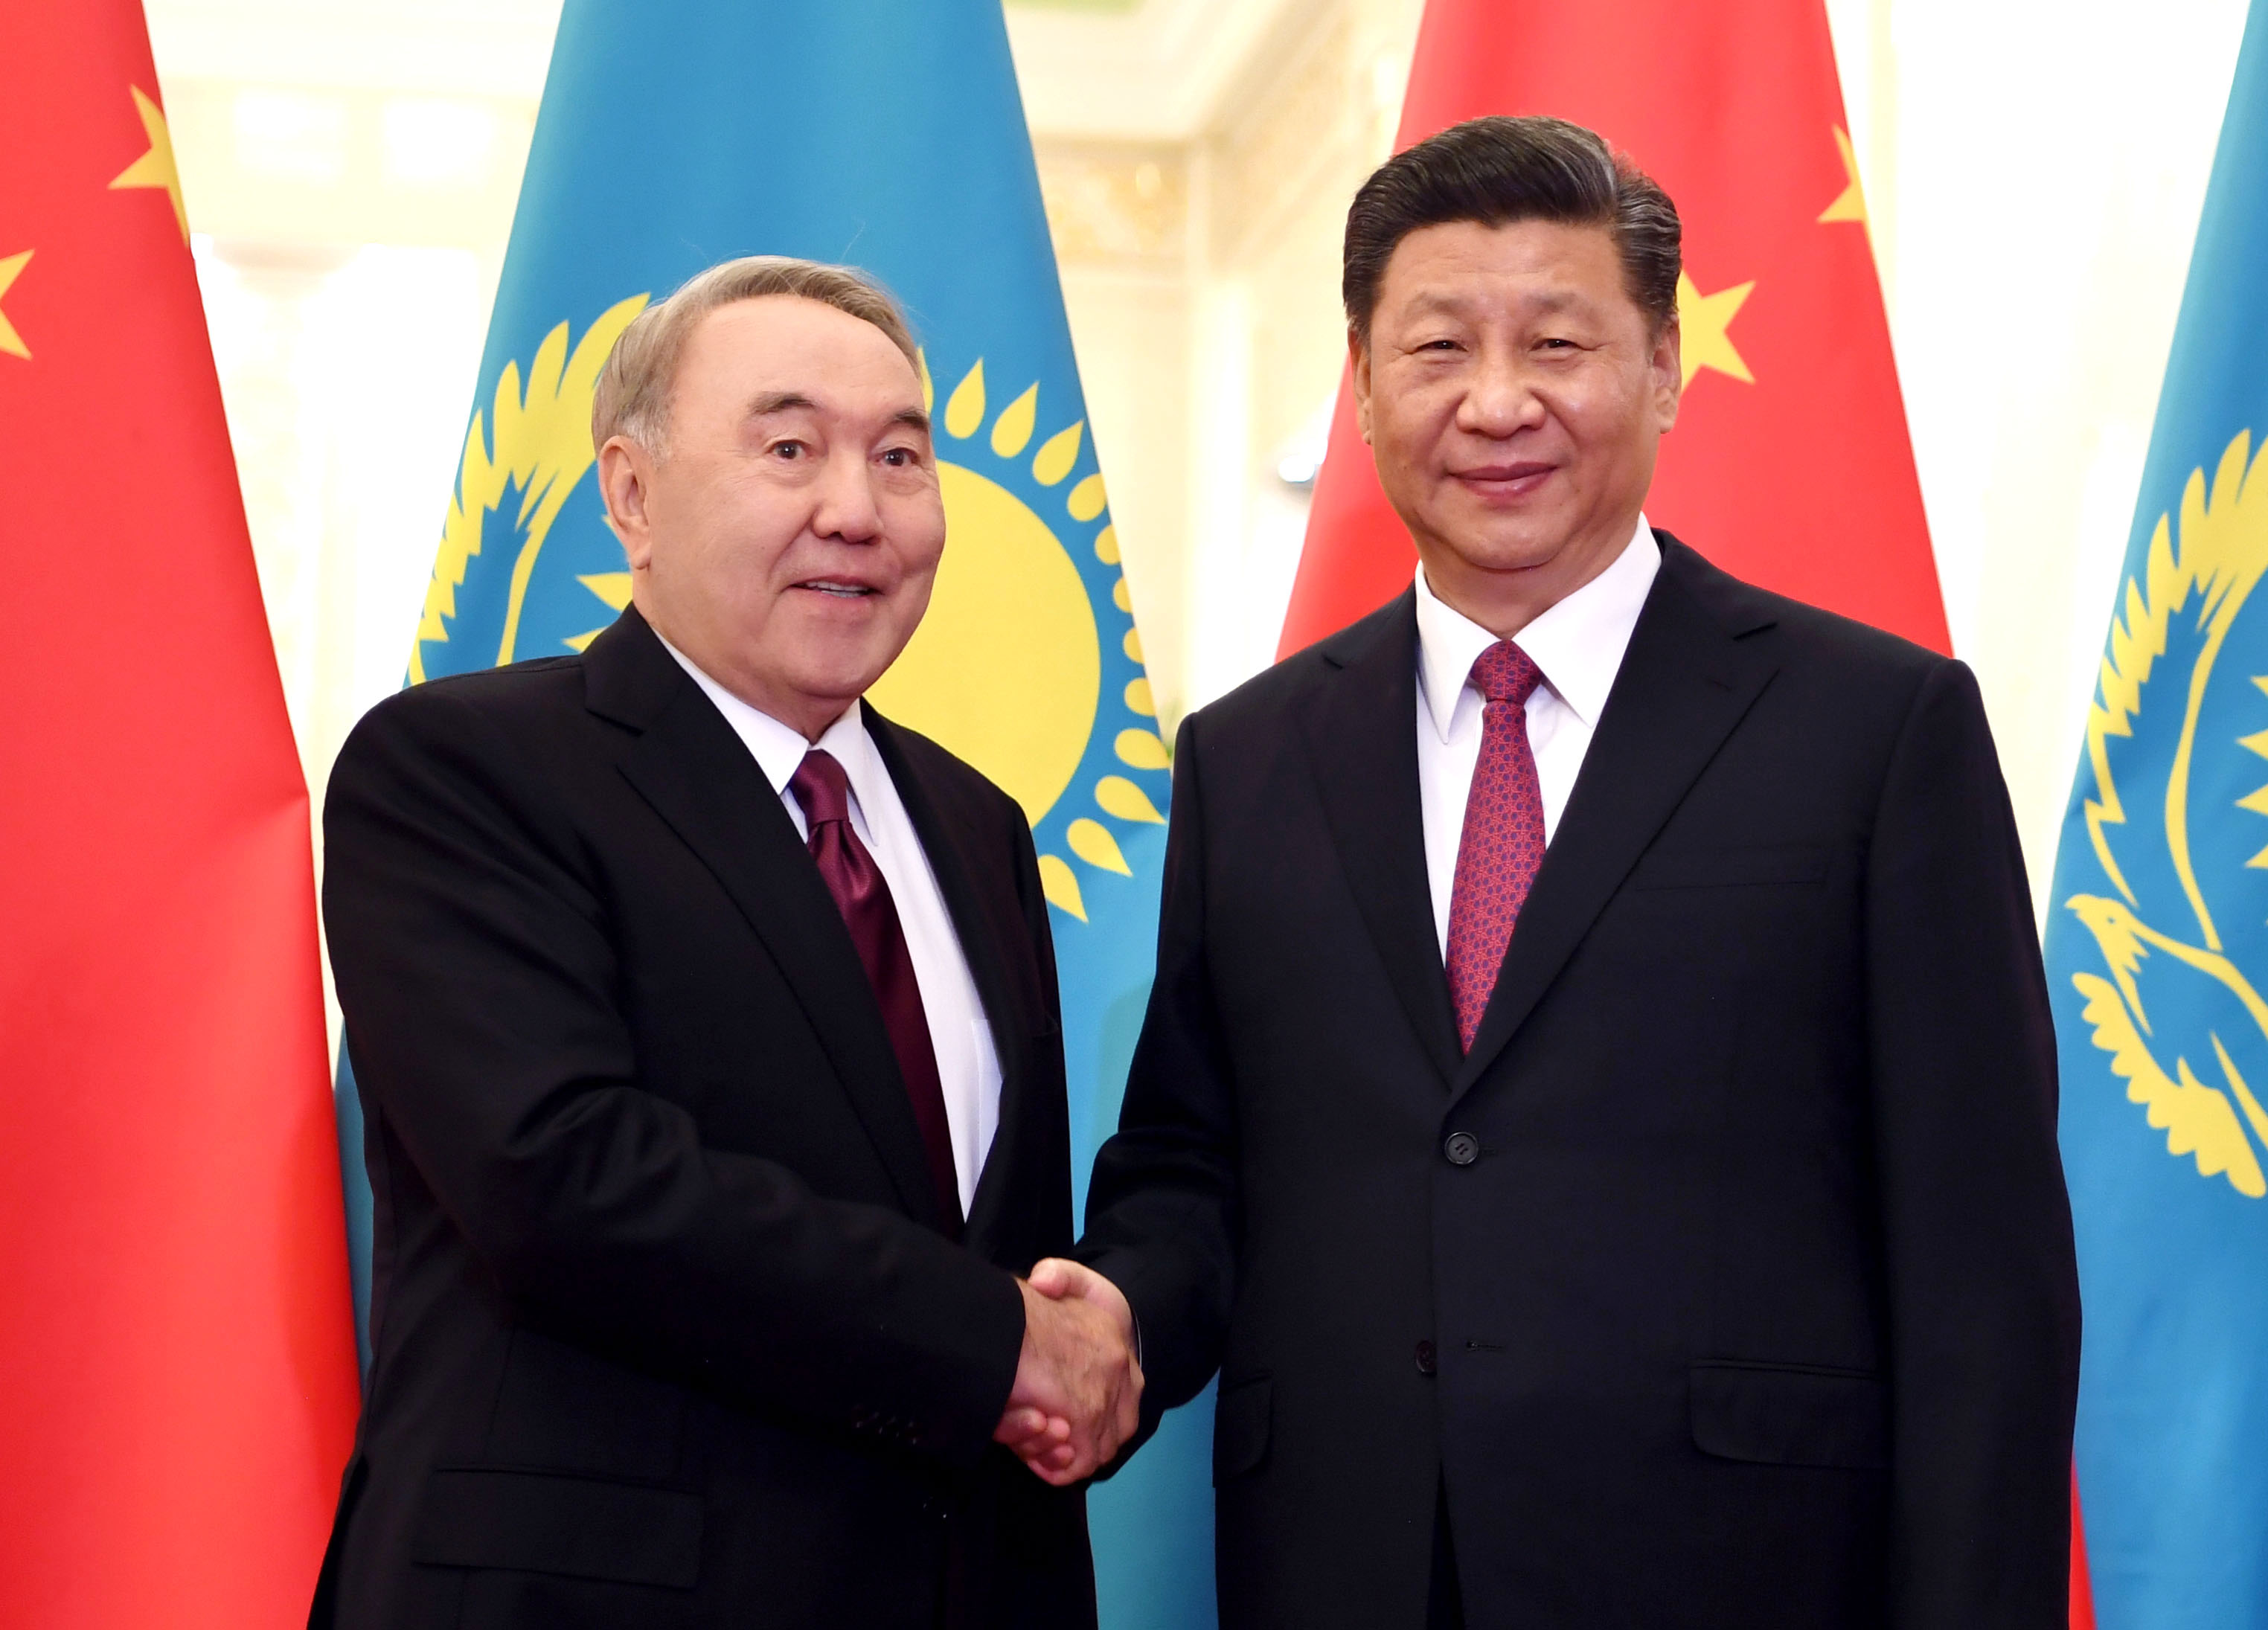 Нурсултан Назарбаев поблагодарил Си Цзиньпина за гостеприимство